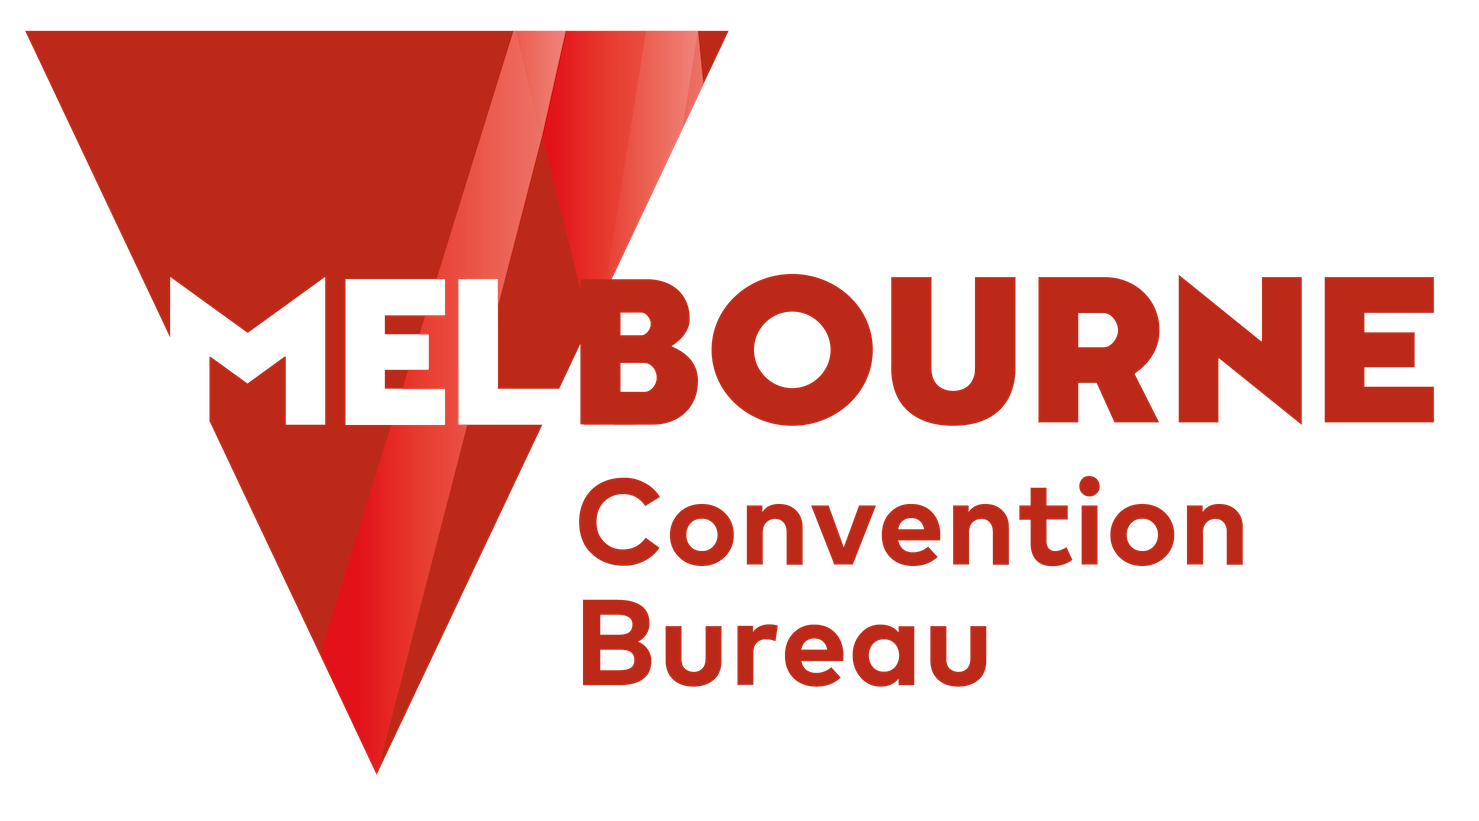 Melbourne Convention Bureau